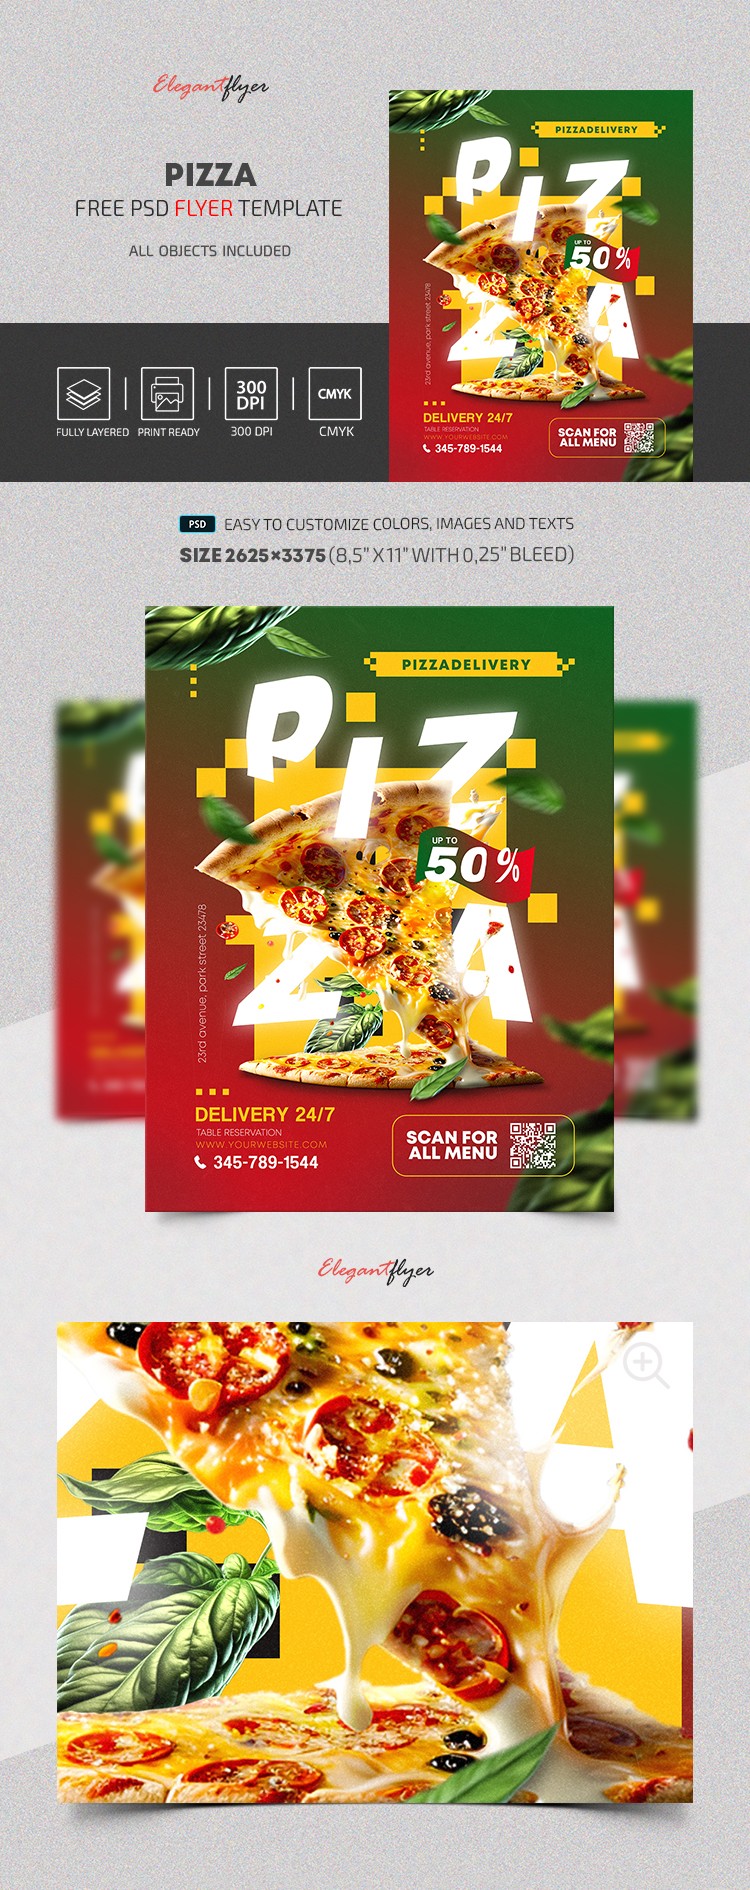 Pizza - Free Flyer PSD Template by ElegantFlyer